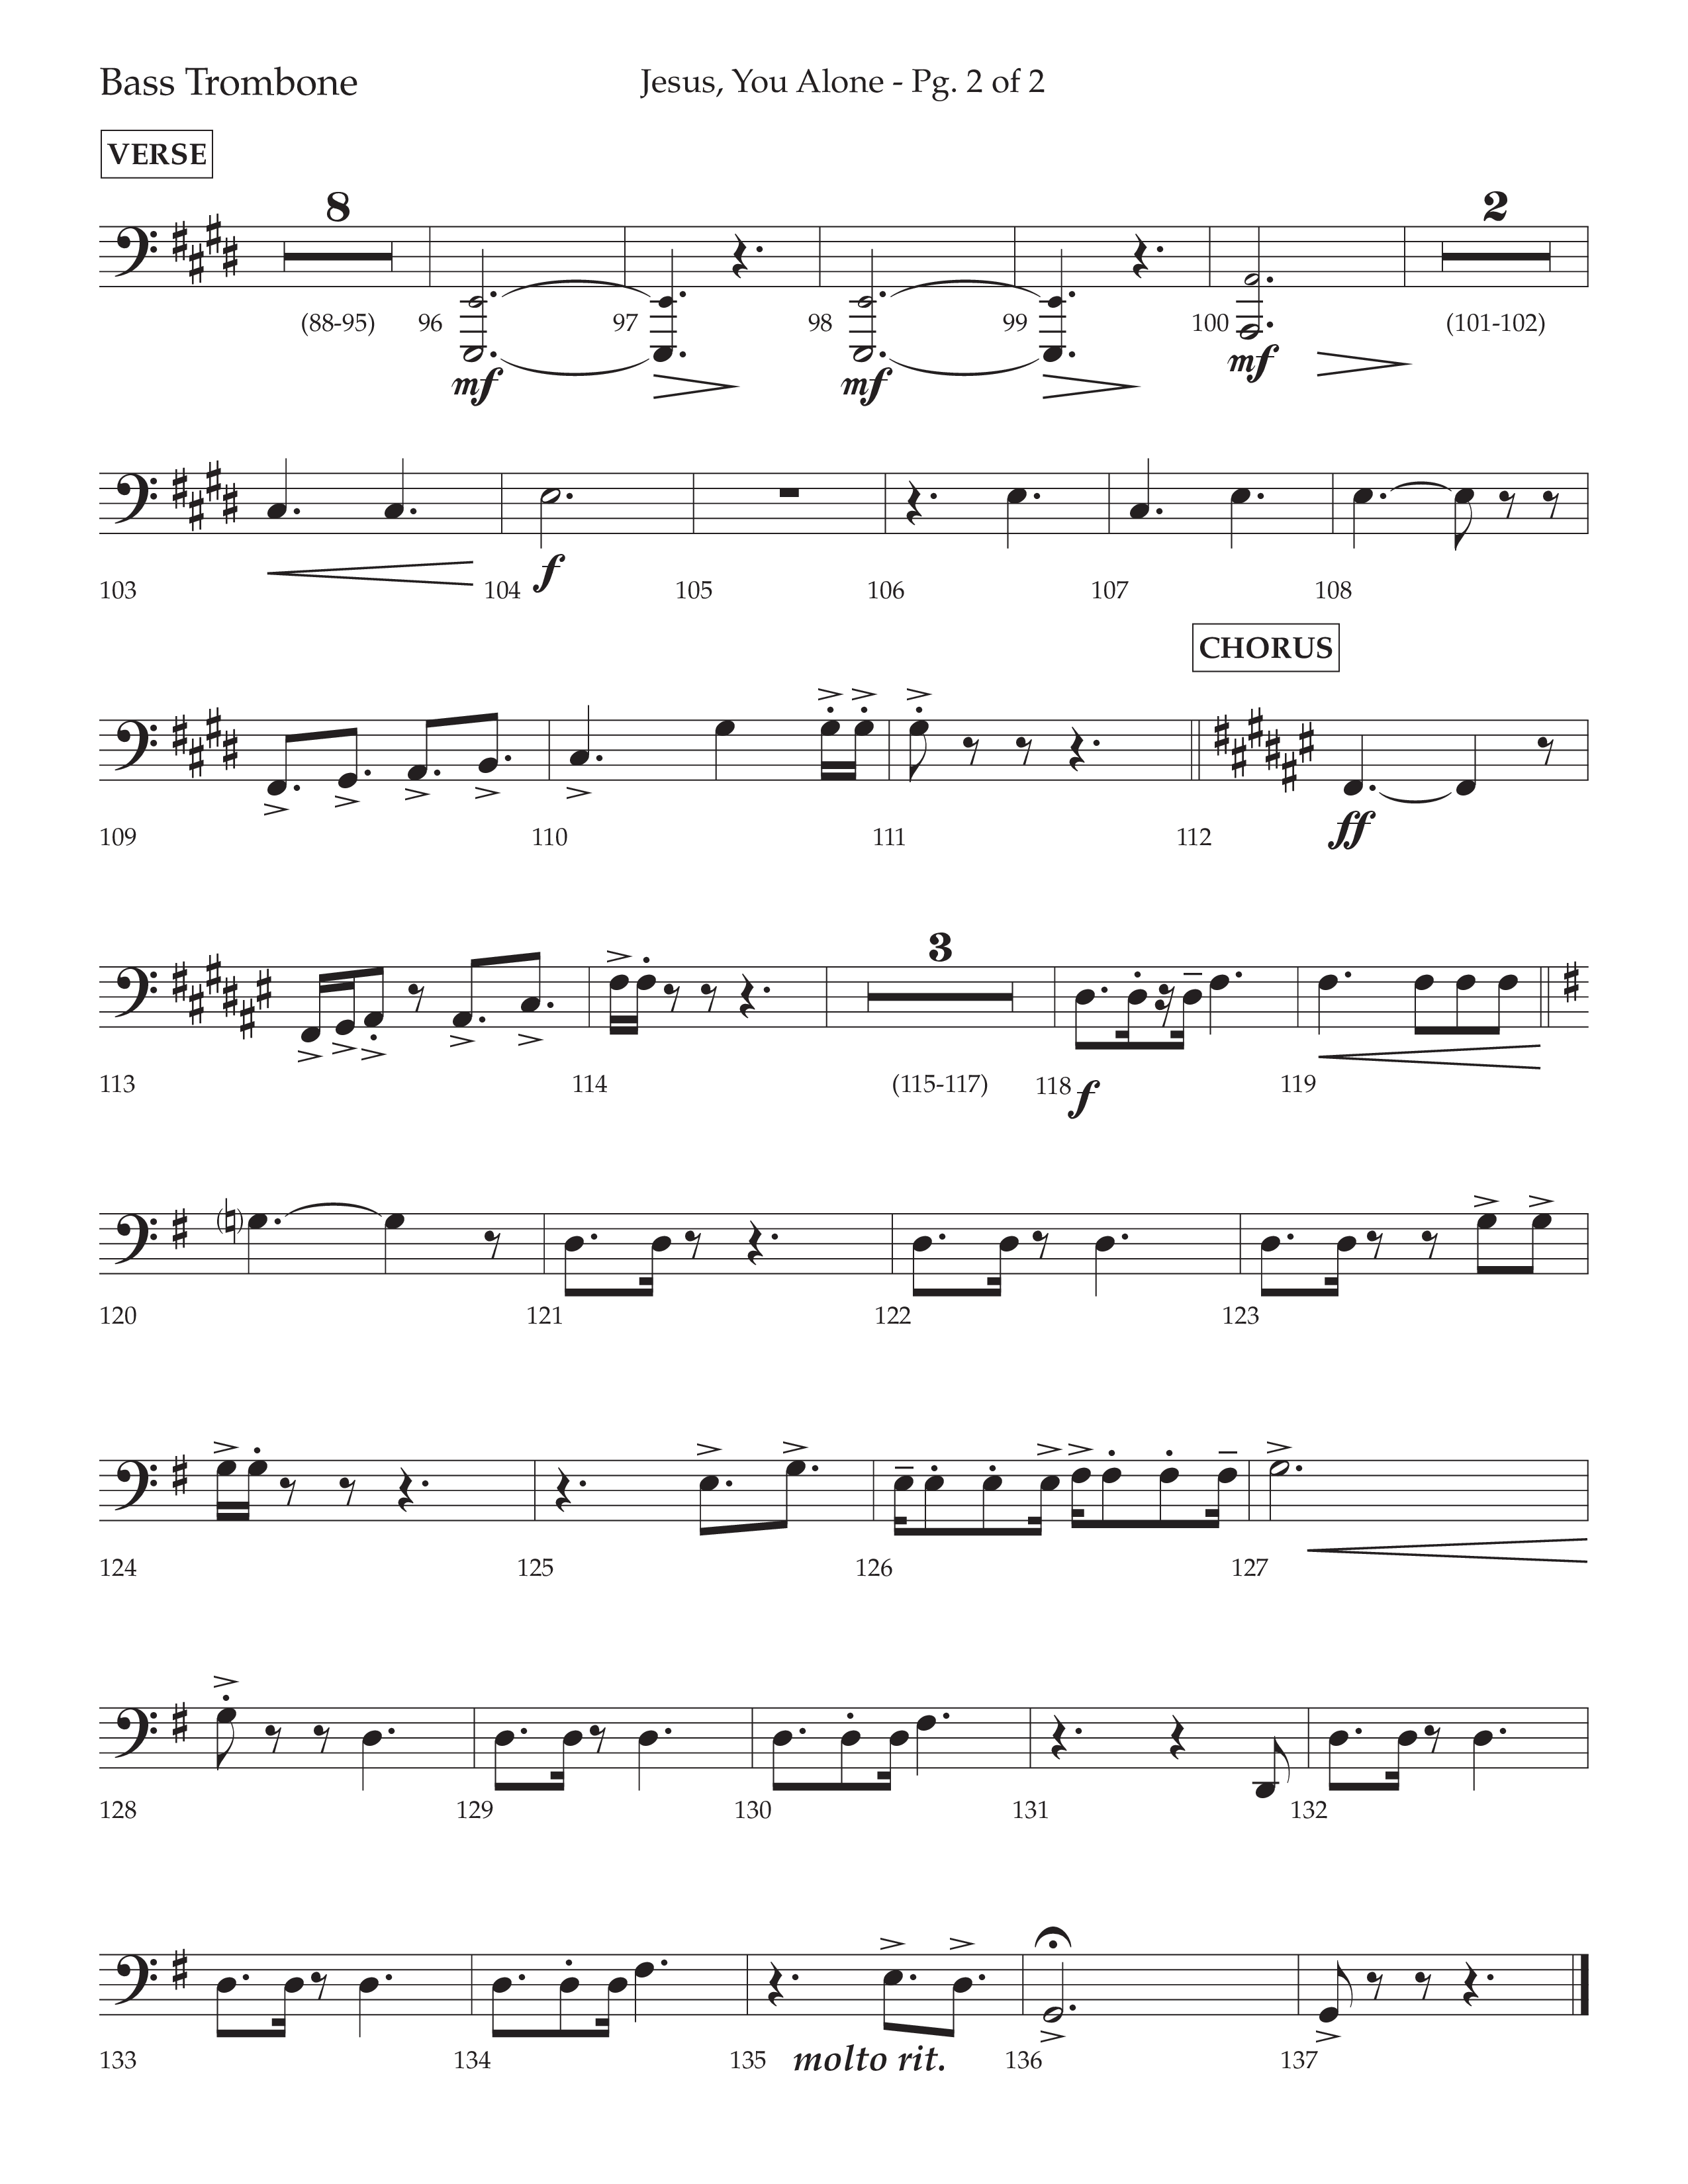 Jesus You Alone (Choral Anthem SATB) Bass Trombone (Lifeway Choral / Arr. David Wise / Orch. Bradley Knight)